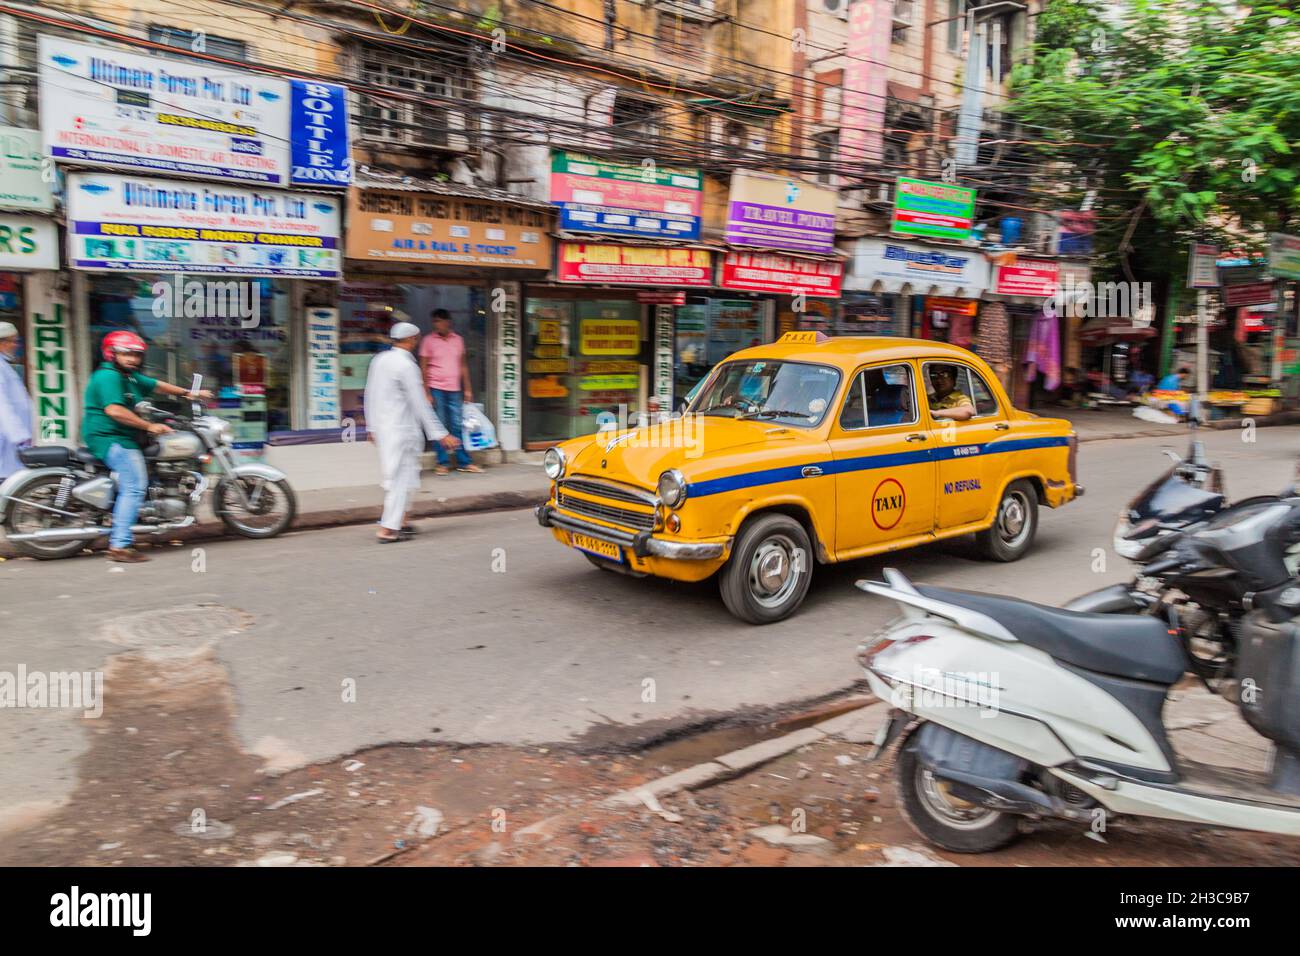 KOLKATA, INDIA - OCTOBER 27, 2016: View of yellow Hindustan Ambassador taxi in the center of Kolkata, India Stock Photo